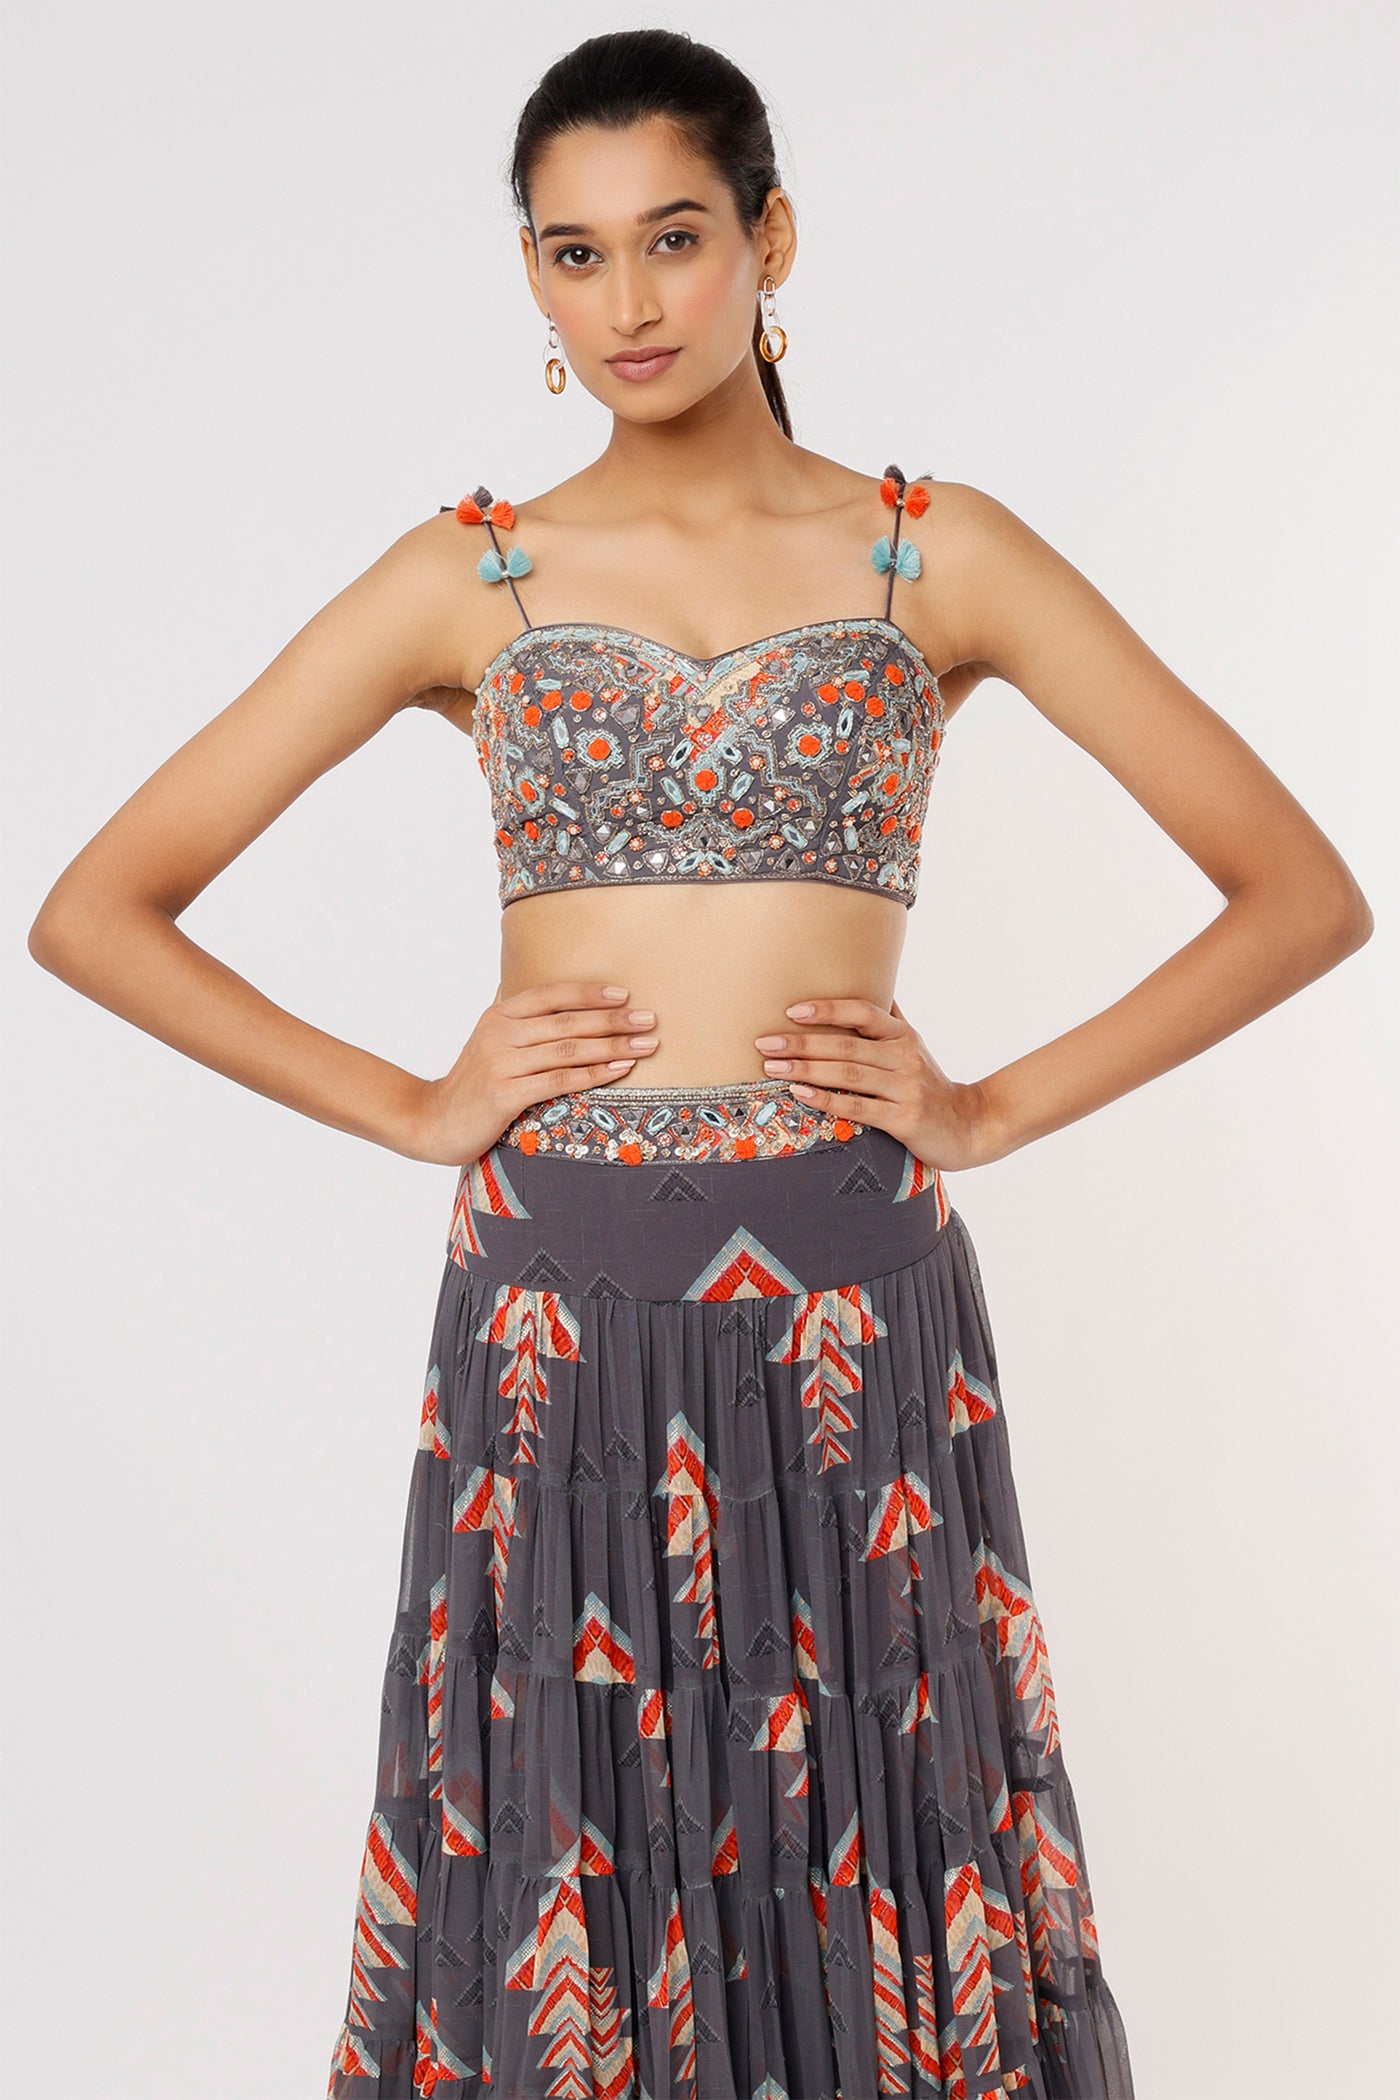 Gopi vaid Eve Tiered Skirt With Bustier grey festive Indian designer wear online shopping melange singapore